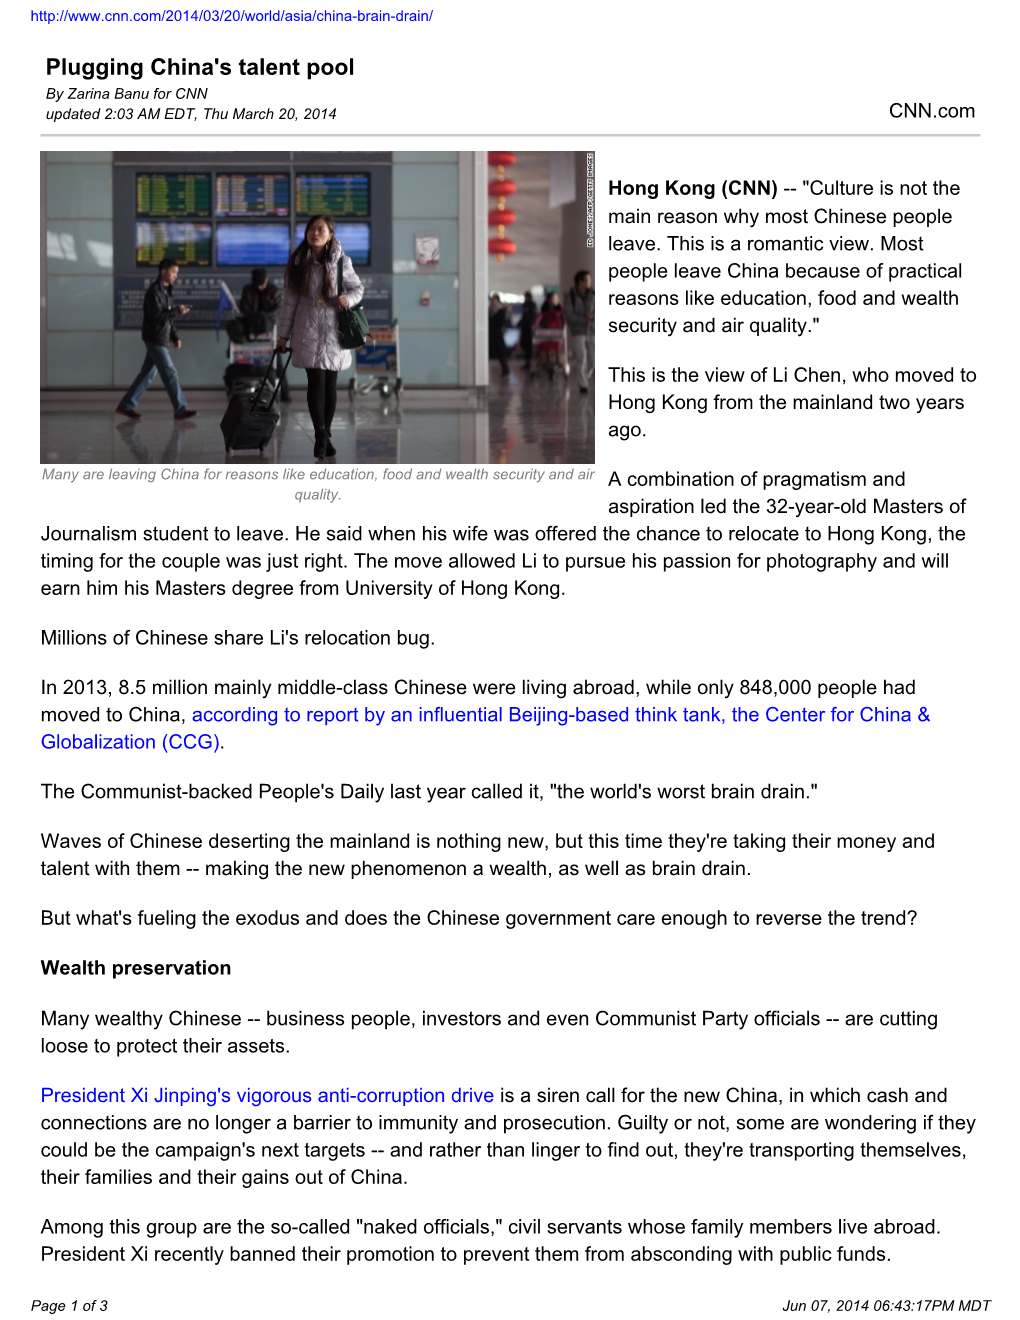 Plugging China's Talent Pool by Zarina Banu for CNN Updated 2:03 AM EDT, Thu March 20, 2014 CNN.Com